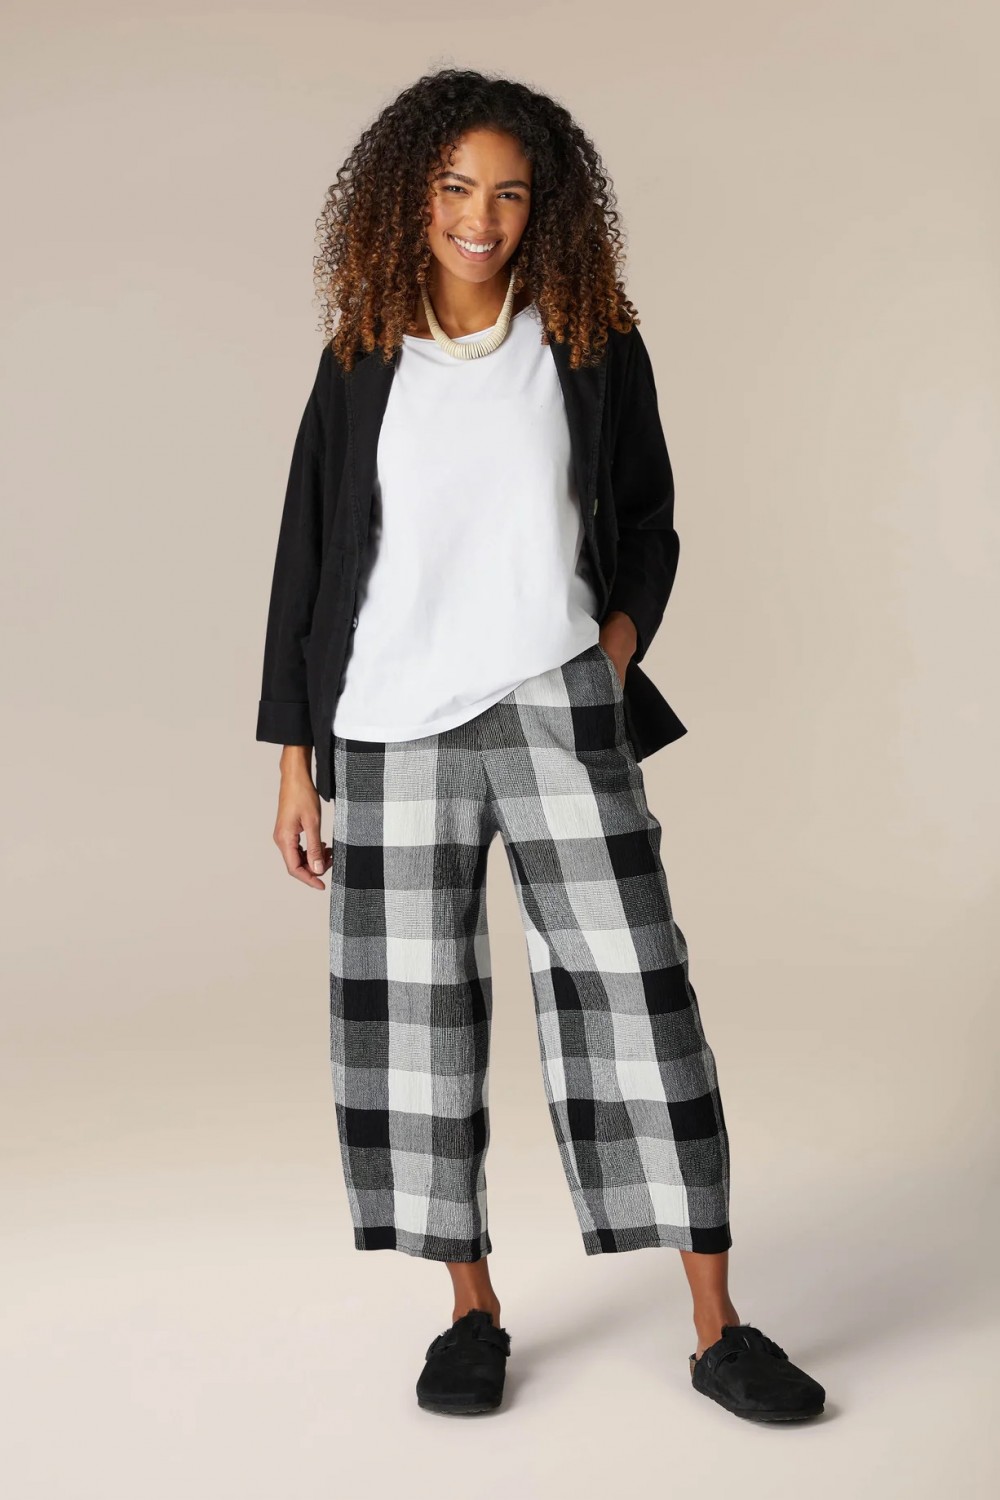 SAHARA Crinkle Grid Check Trousers Black/White